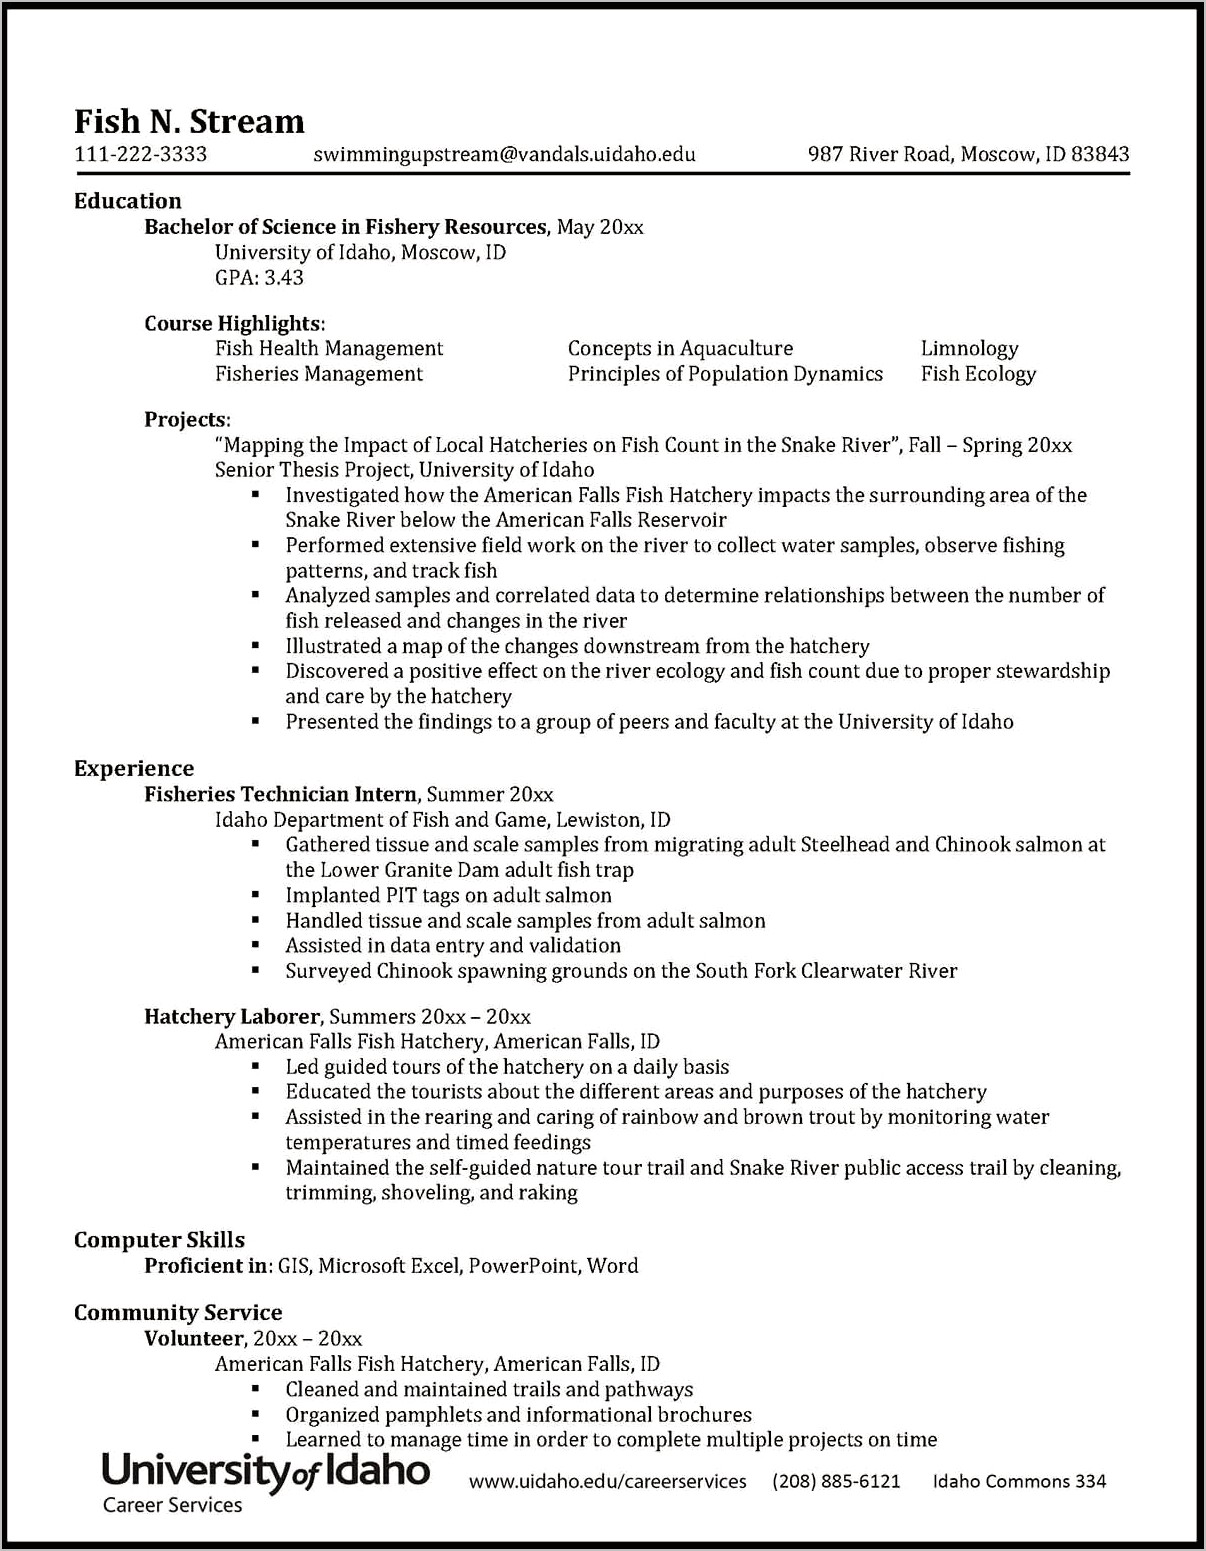 Sample Resume For Public Health Internship